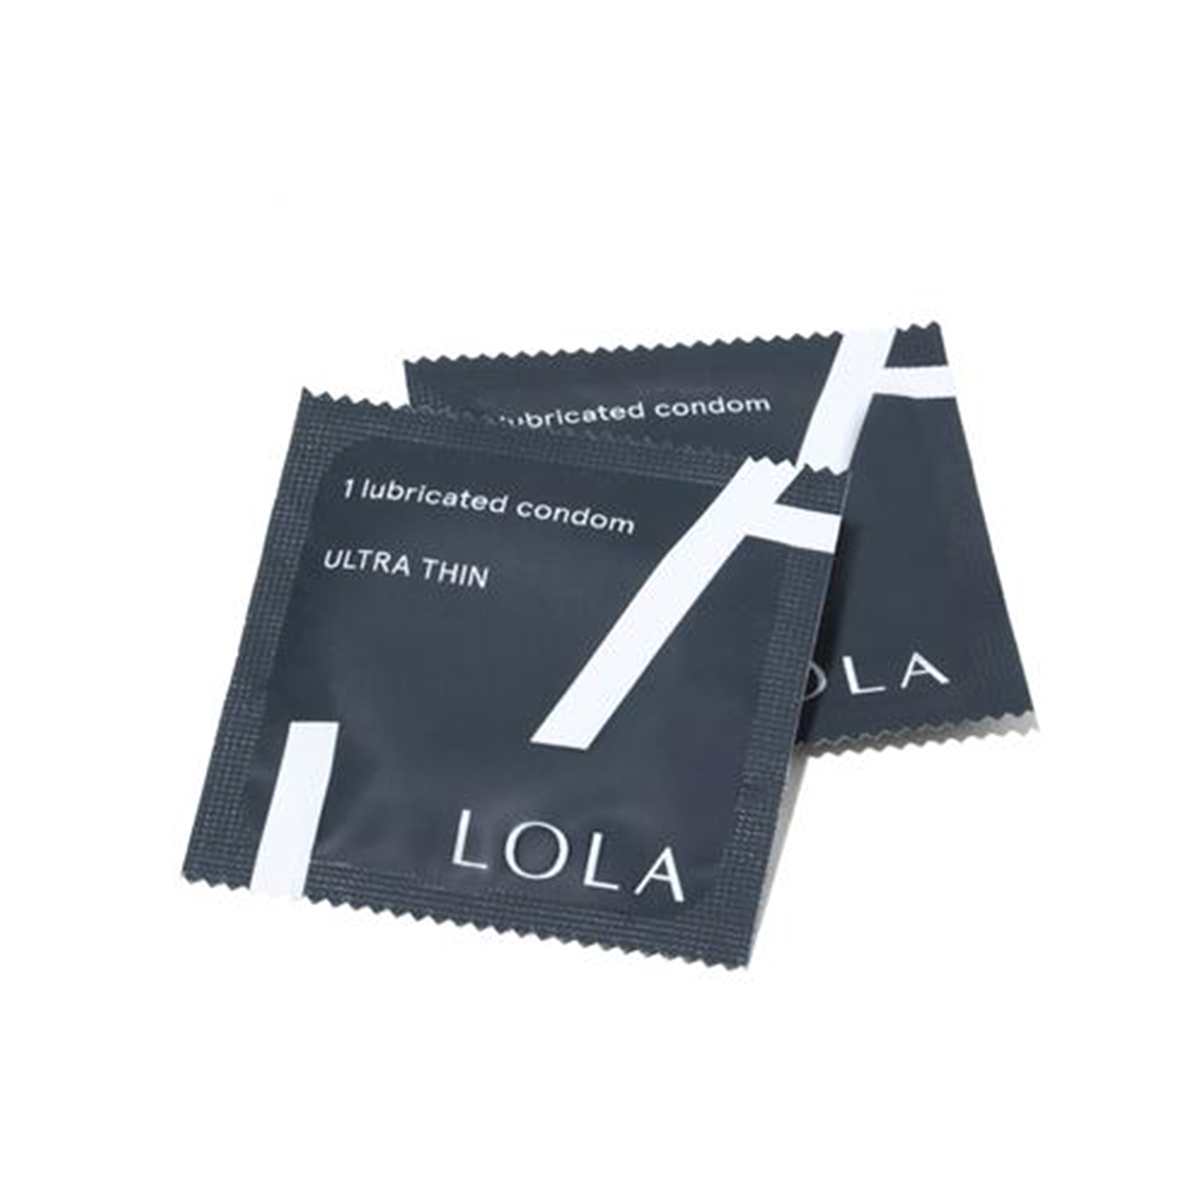 Lola Ultra Thin Lubricated Condoms